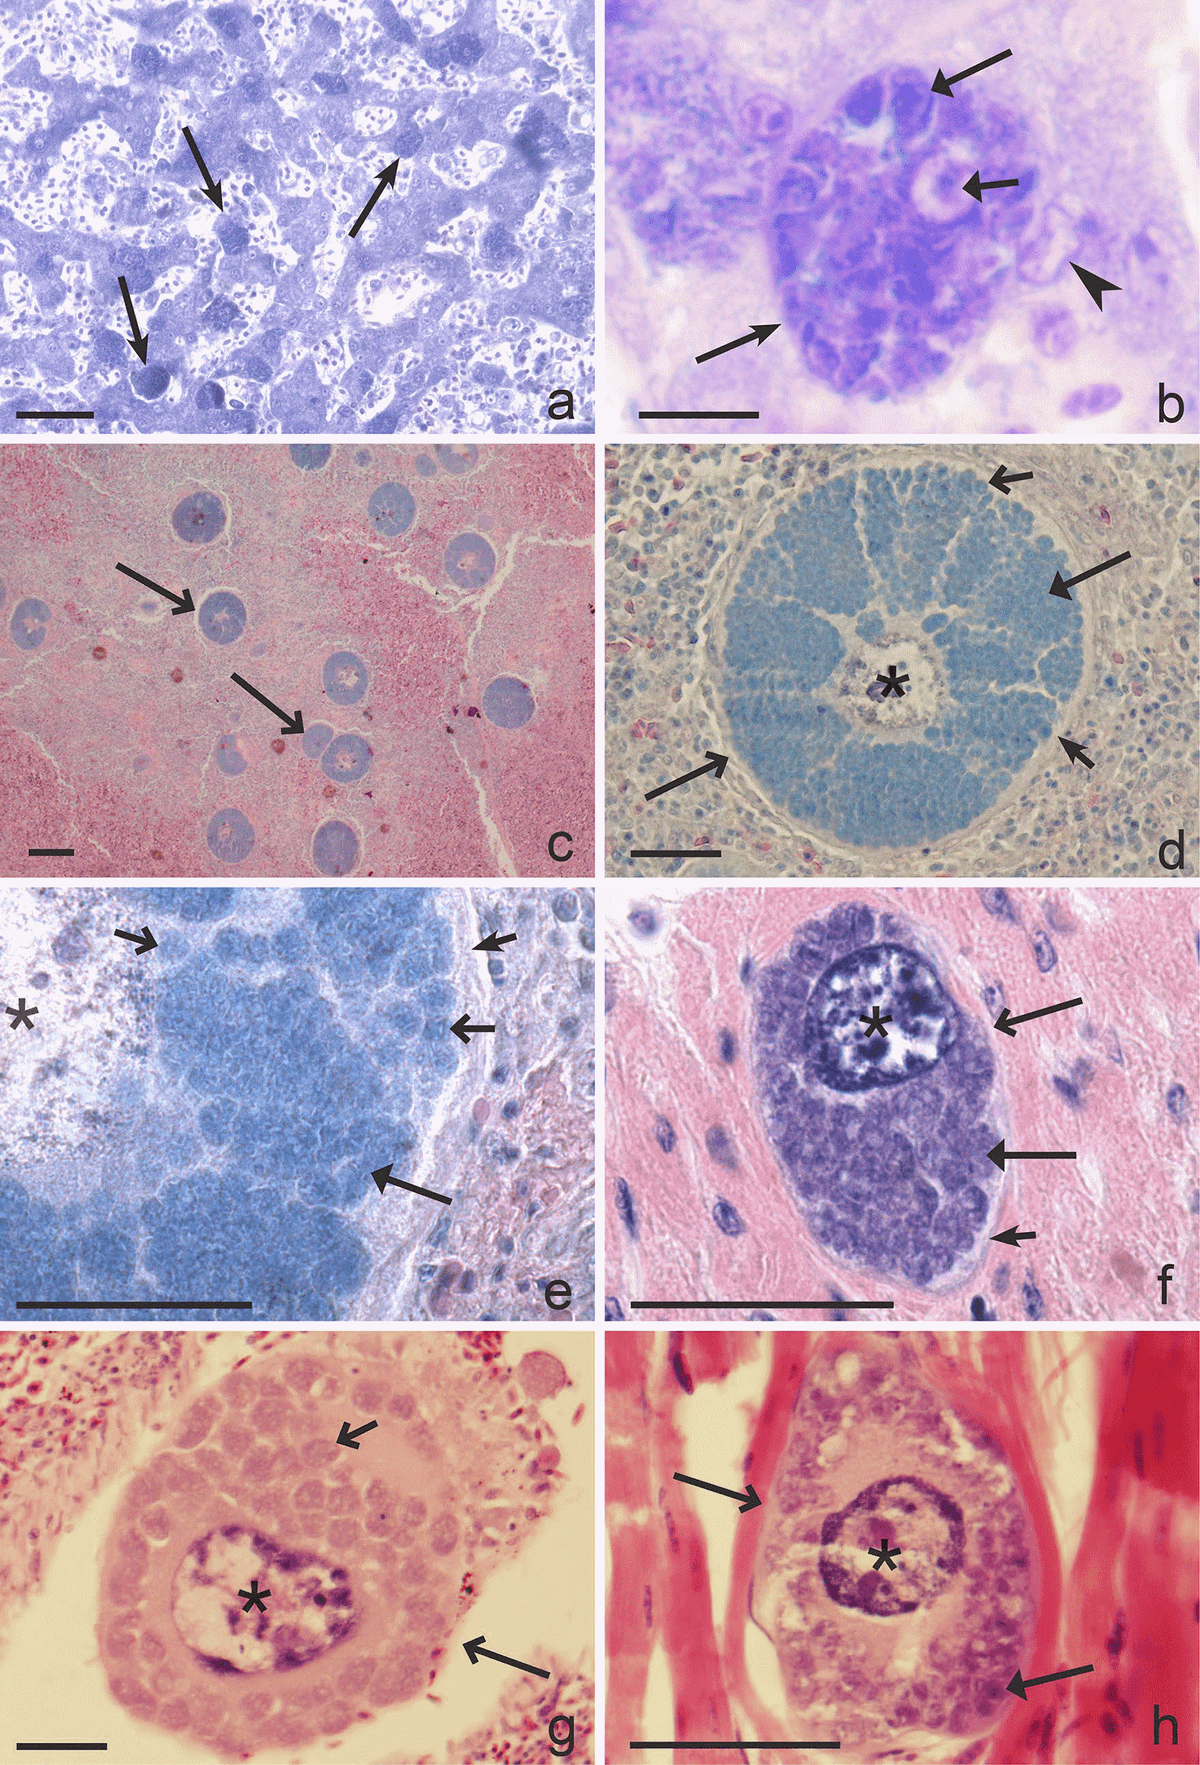 Exo-erythrocytic development of avian malaria and related haemosporidian parasites - Image 11